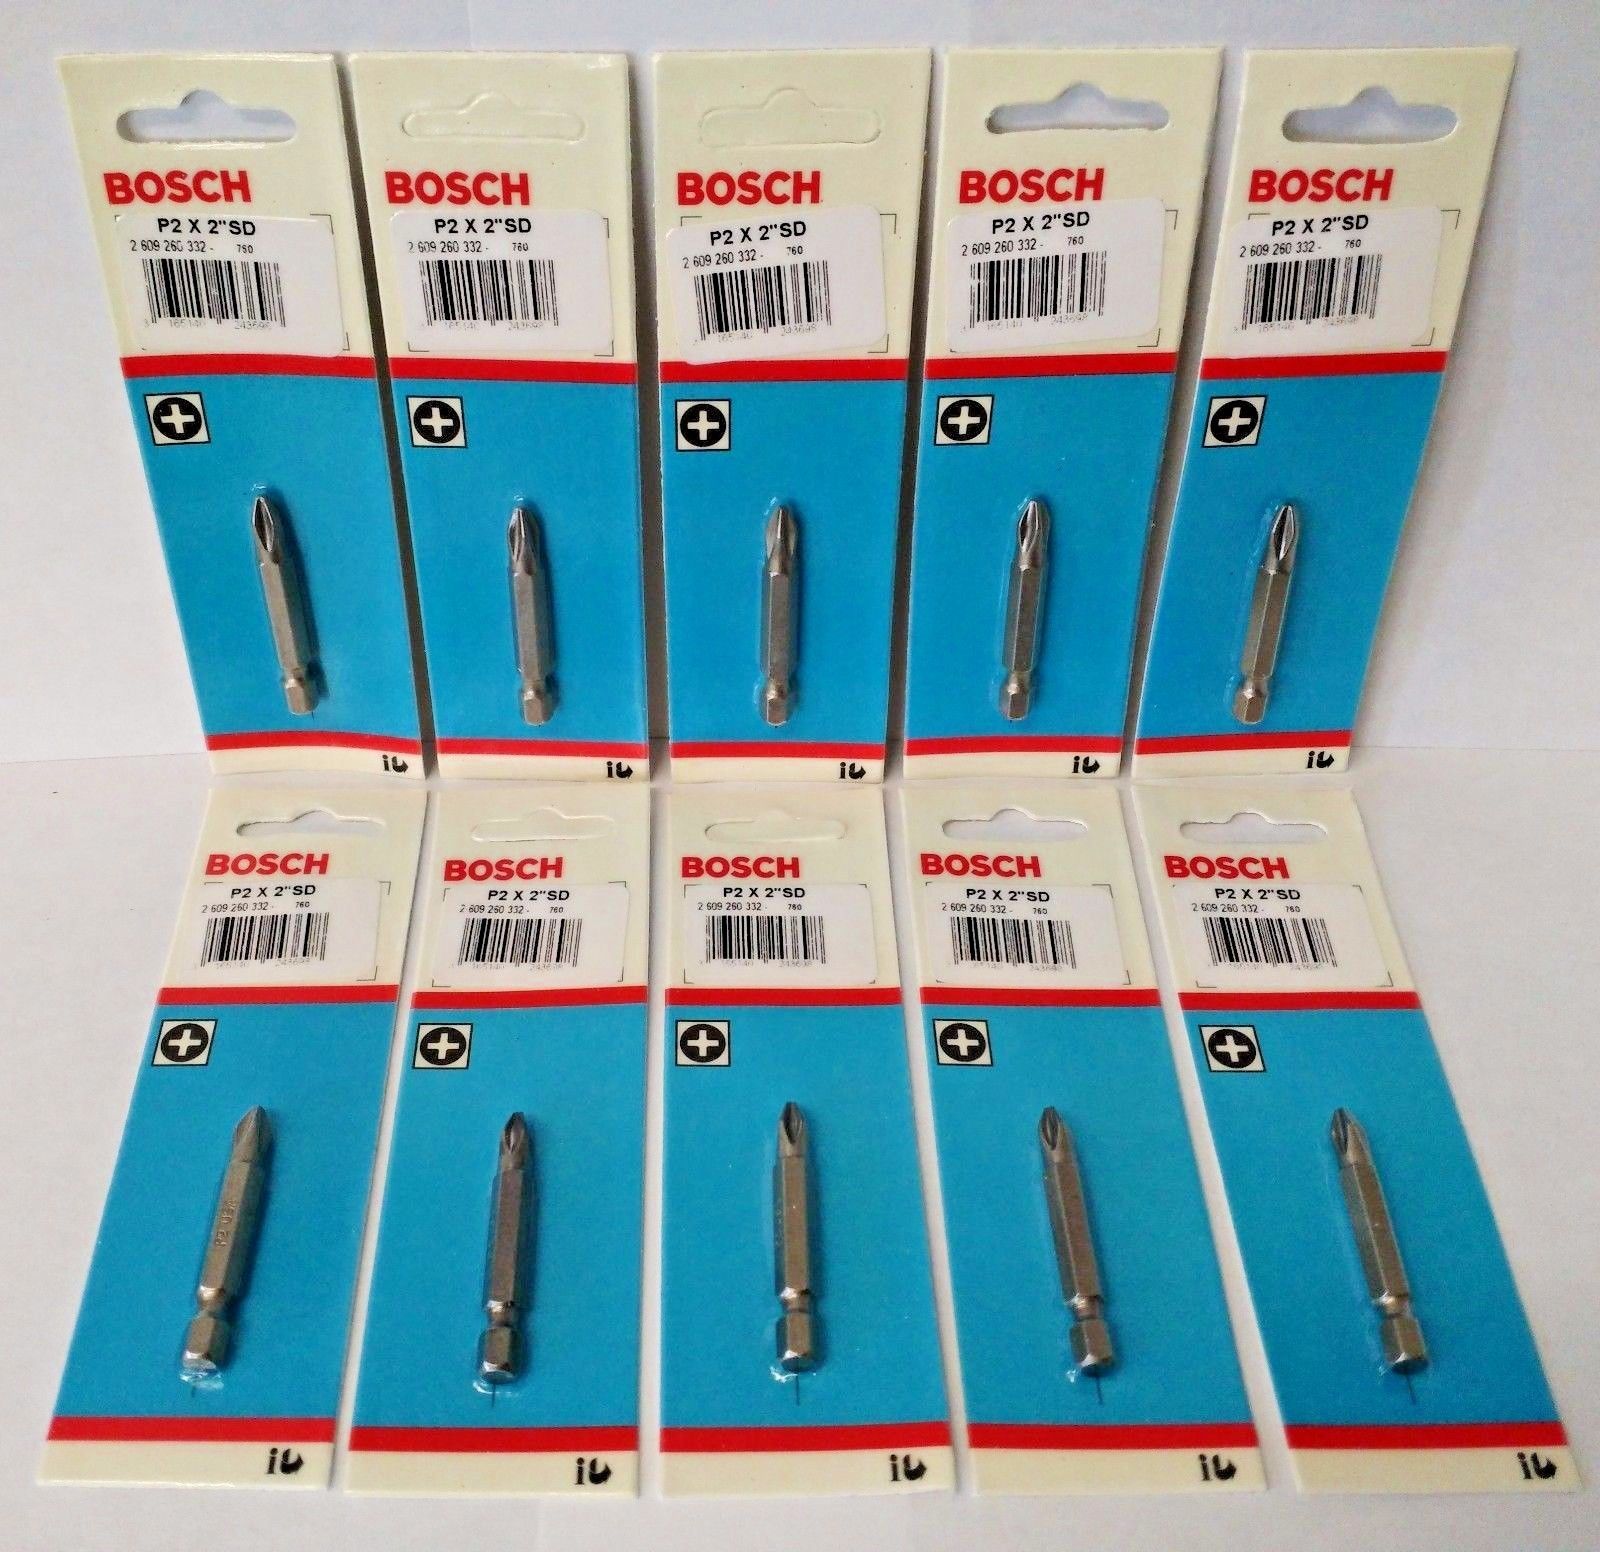 Bosch 2609260332 #2 Phillips Bits (P2 x 2") USA 10 Packs